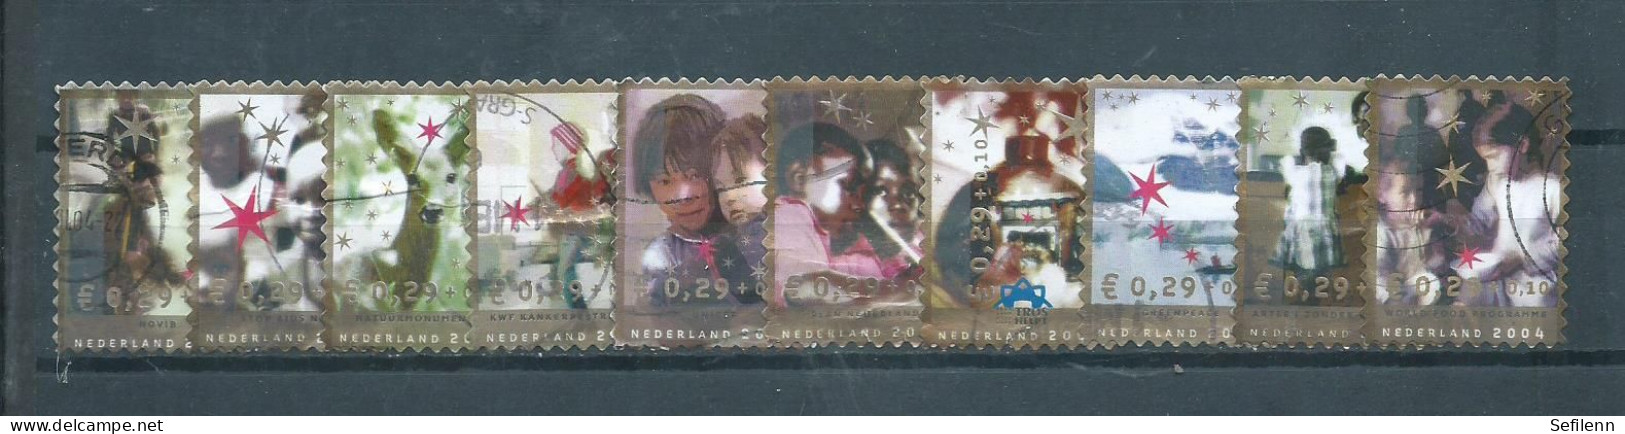 2004 Netherlands Complete Set Kerst,noël,Weihnachten,christmas Used/gebruikt/oblitere - Used Stamps